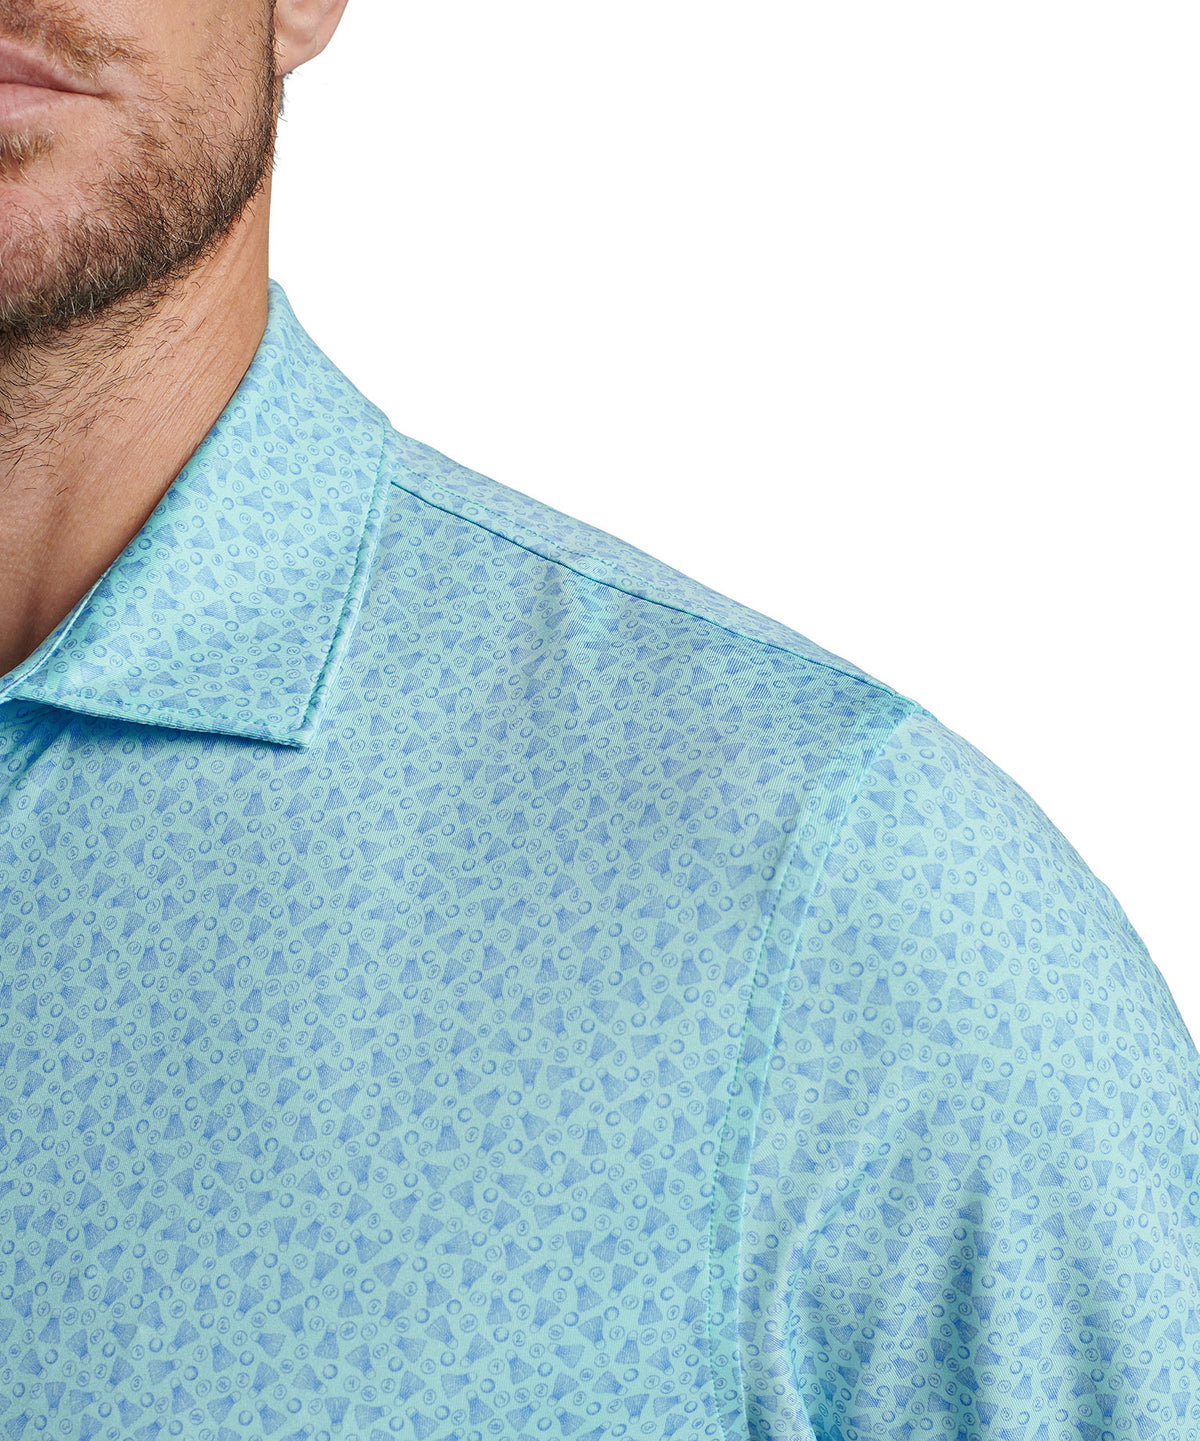 Peter Millar Short Sleeve Birdie Time Print Polo Knit Shirt, Men's Big & Tall